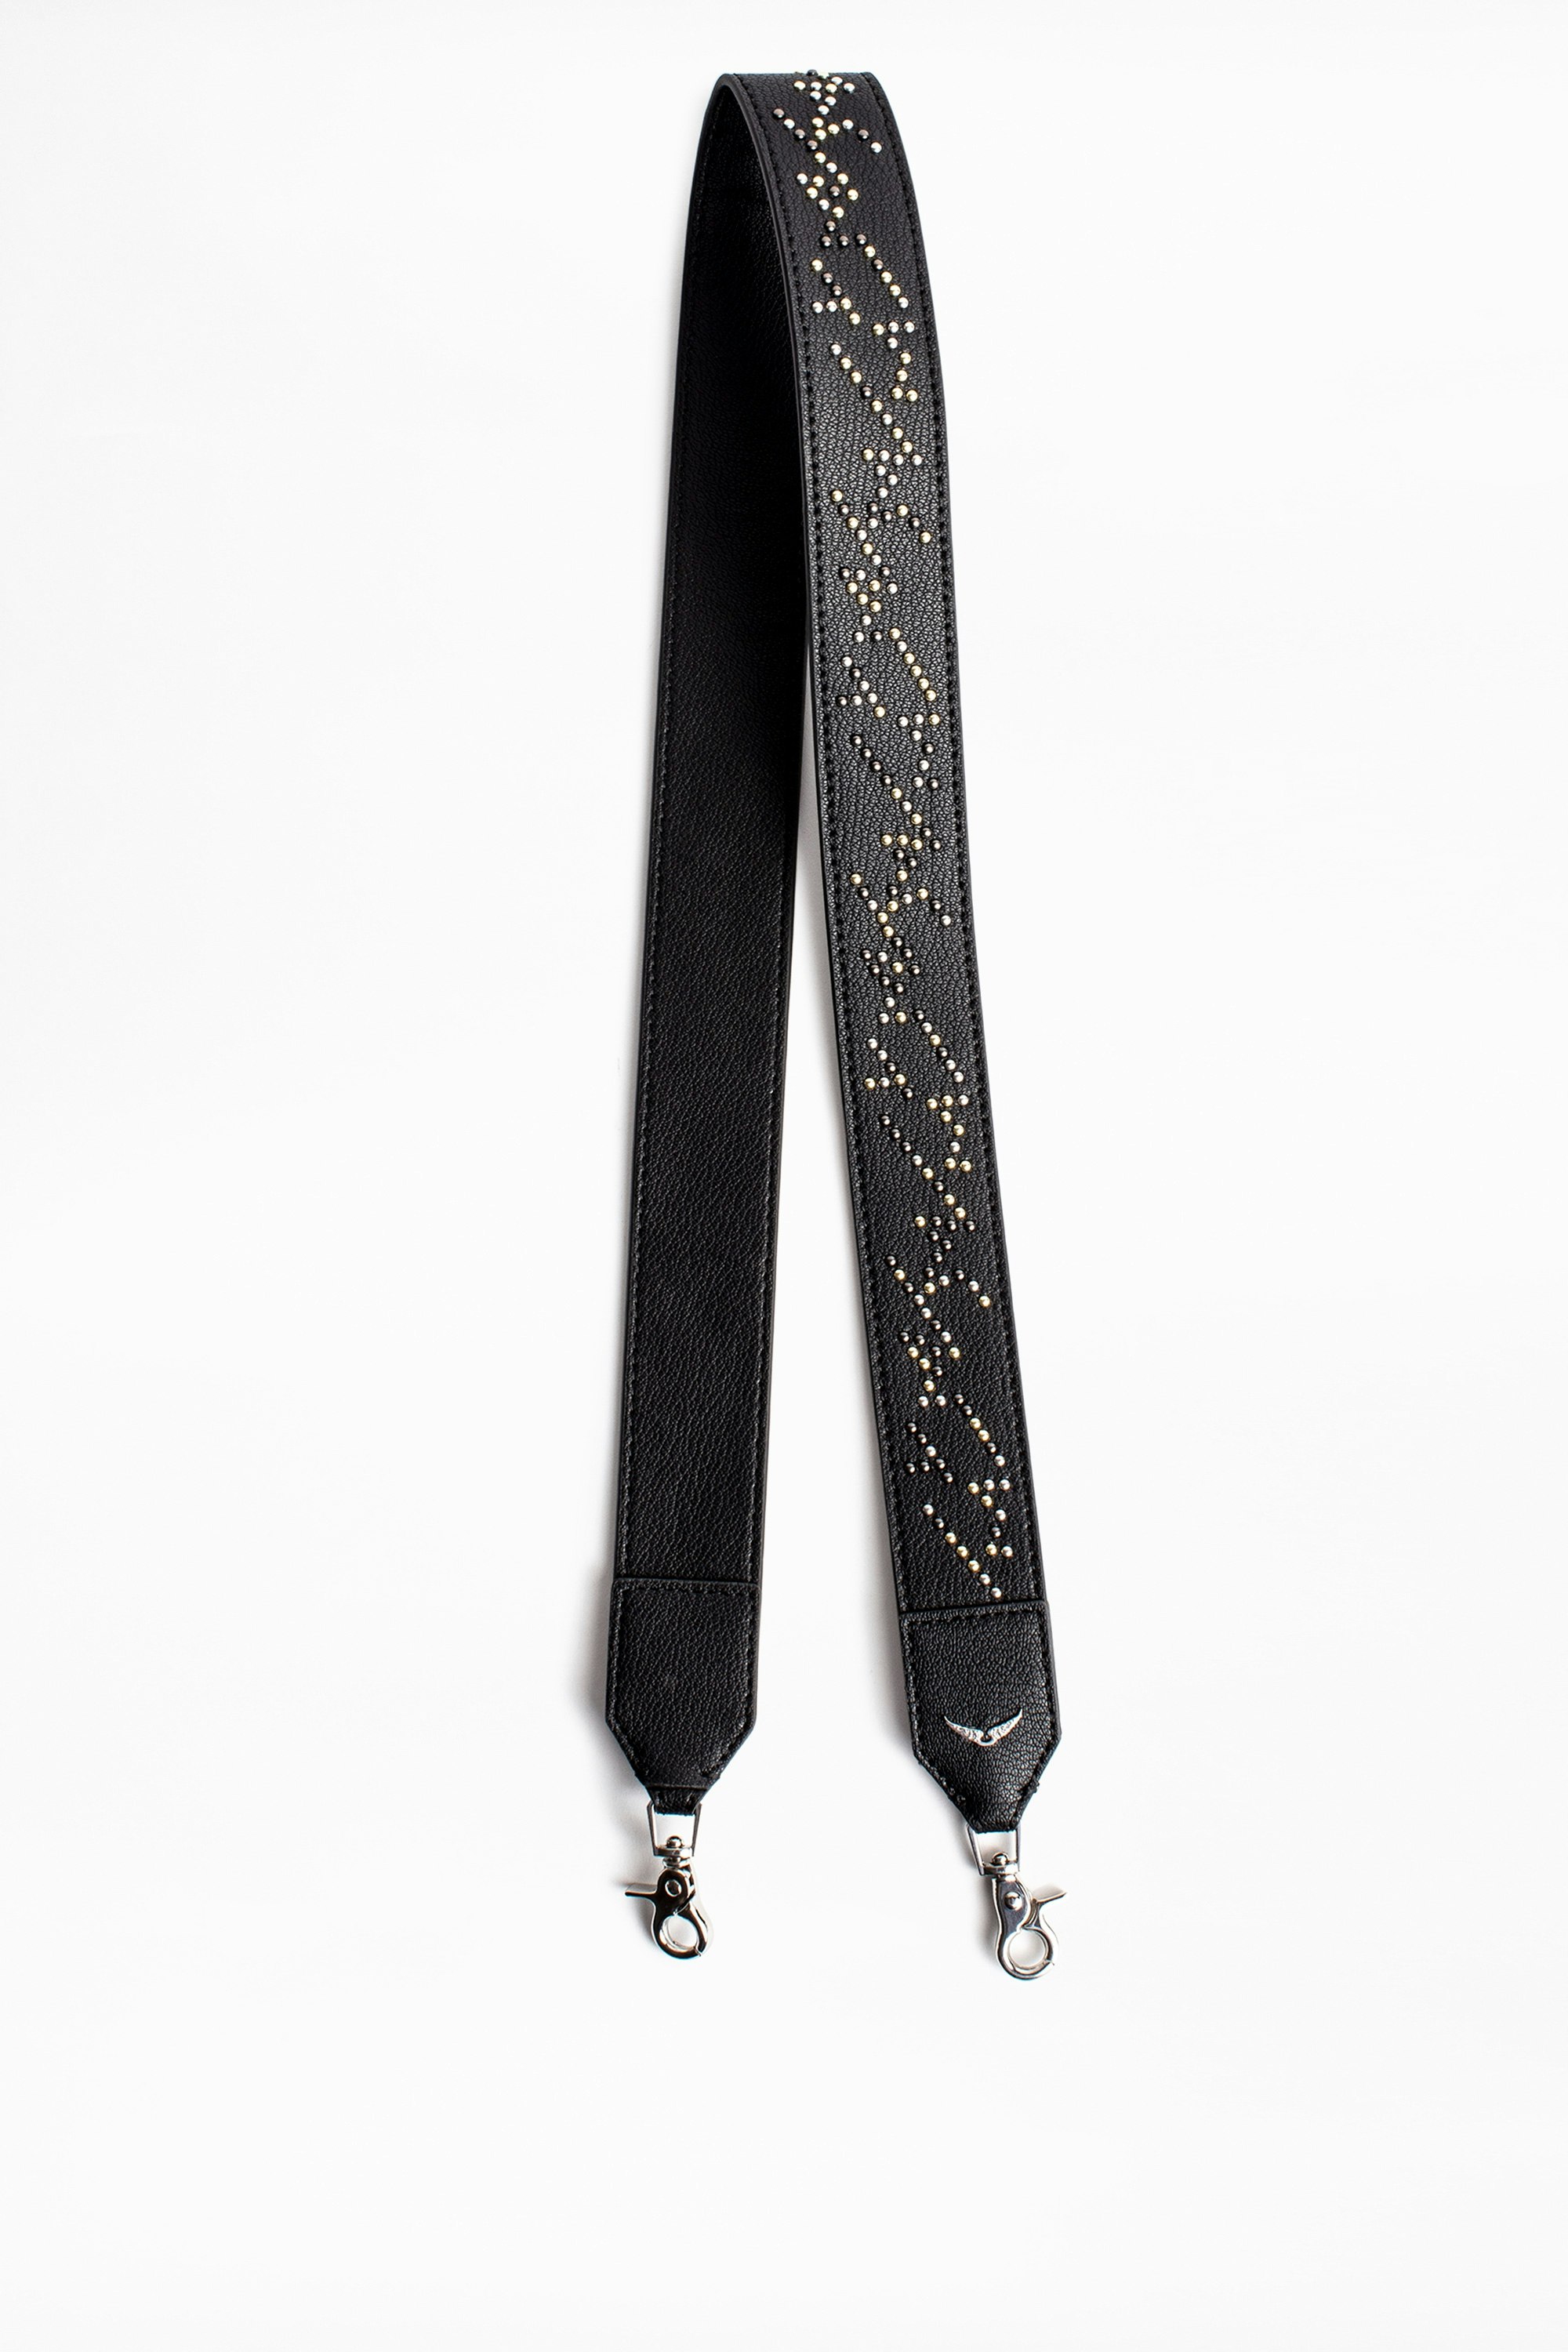 leather bag strap